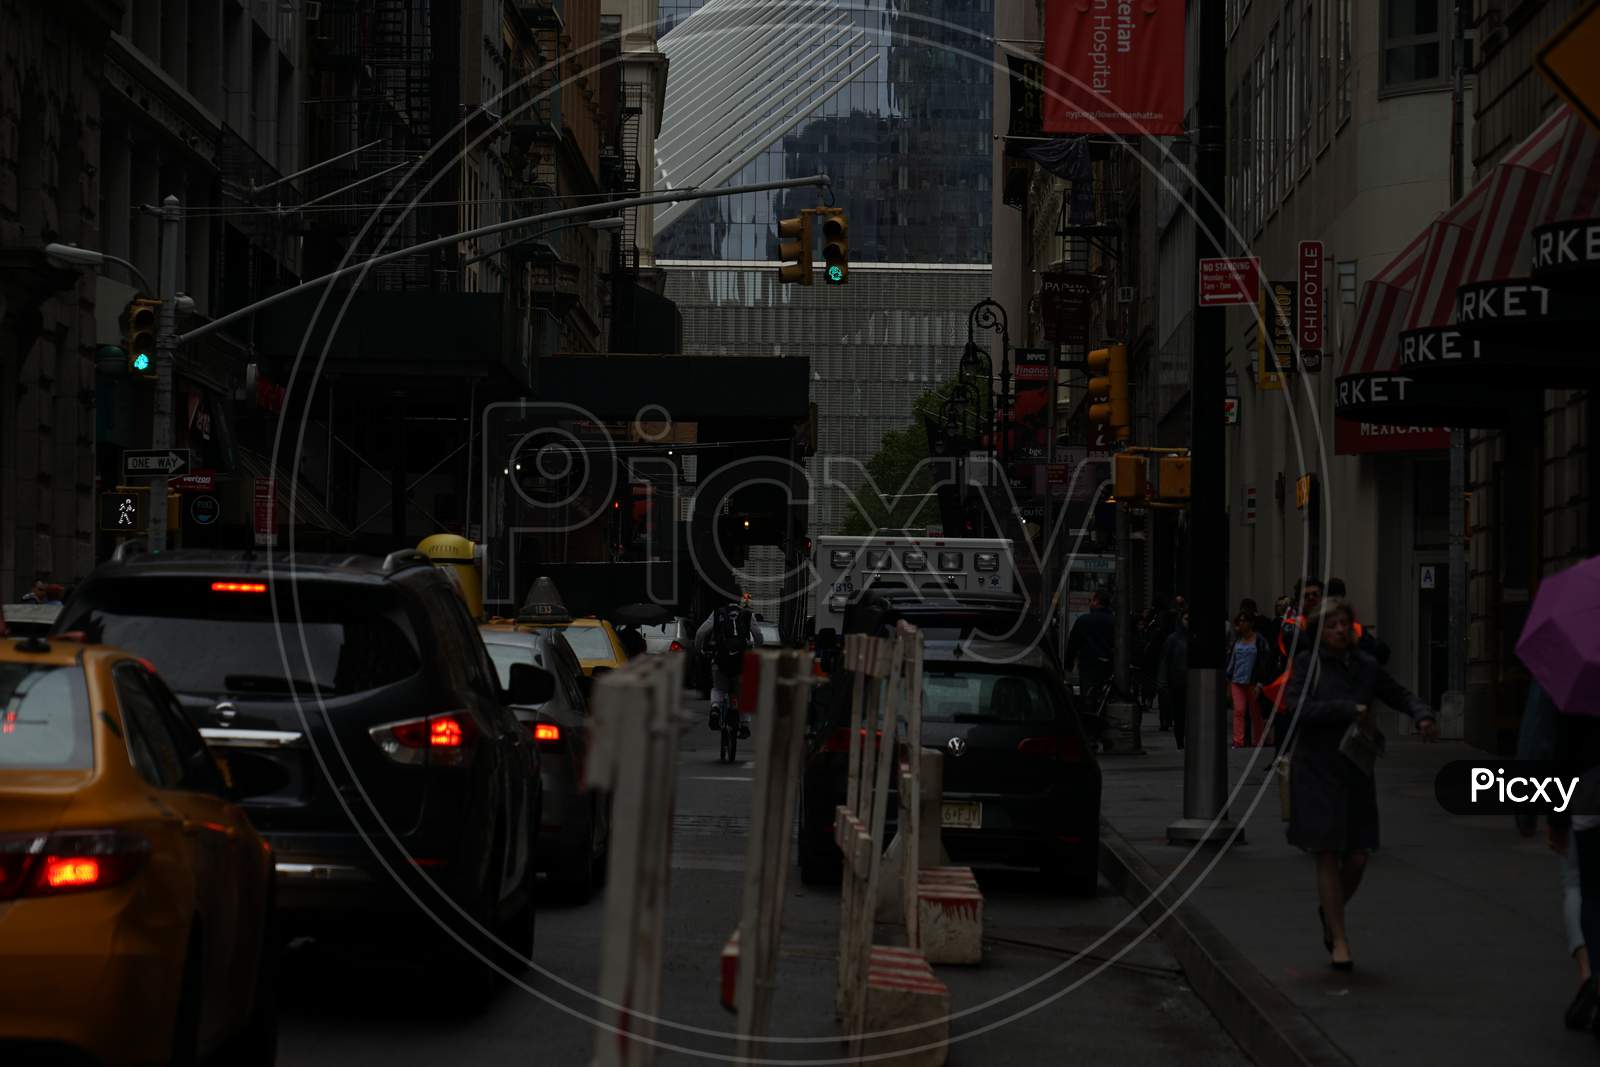 Streets Of New York Lower Manhattan